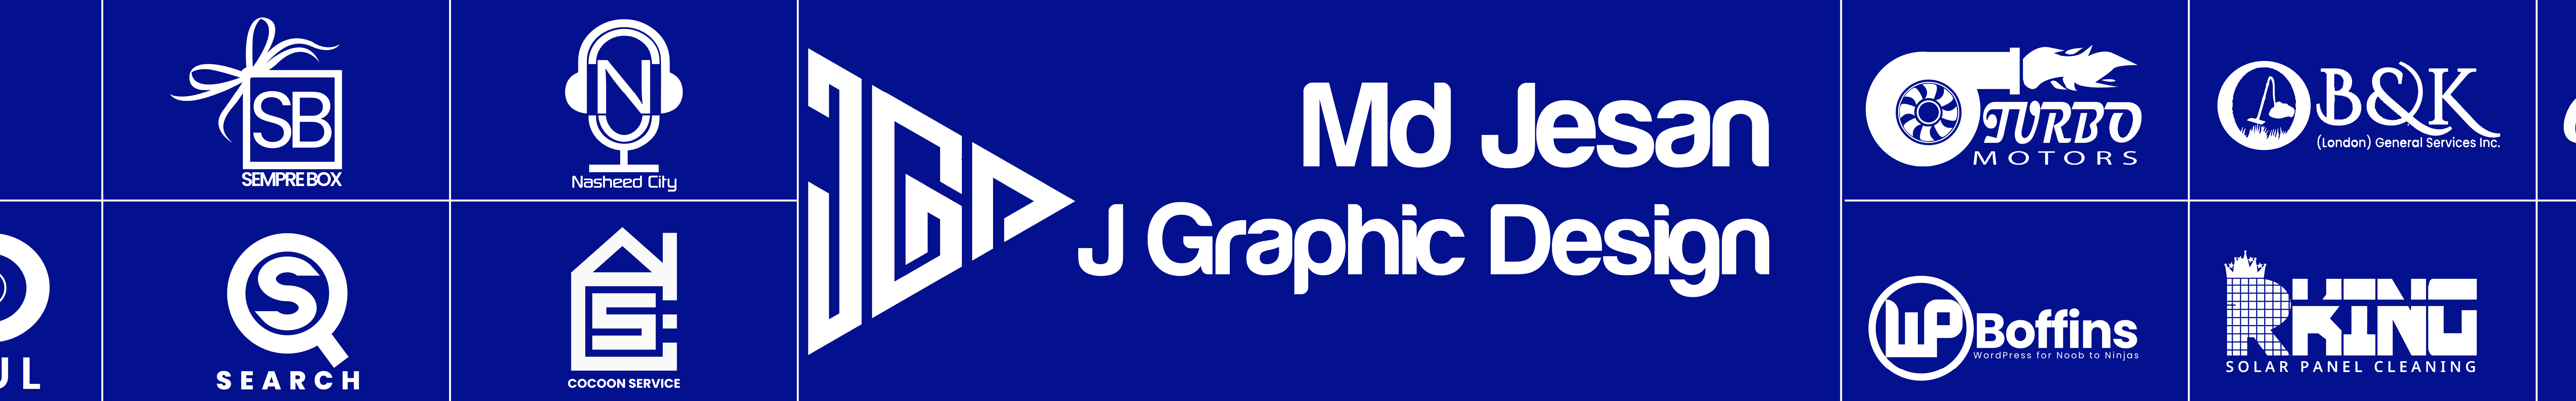 Banner de perfil de Md Jisan ✪